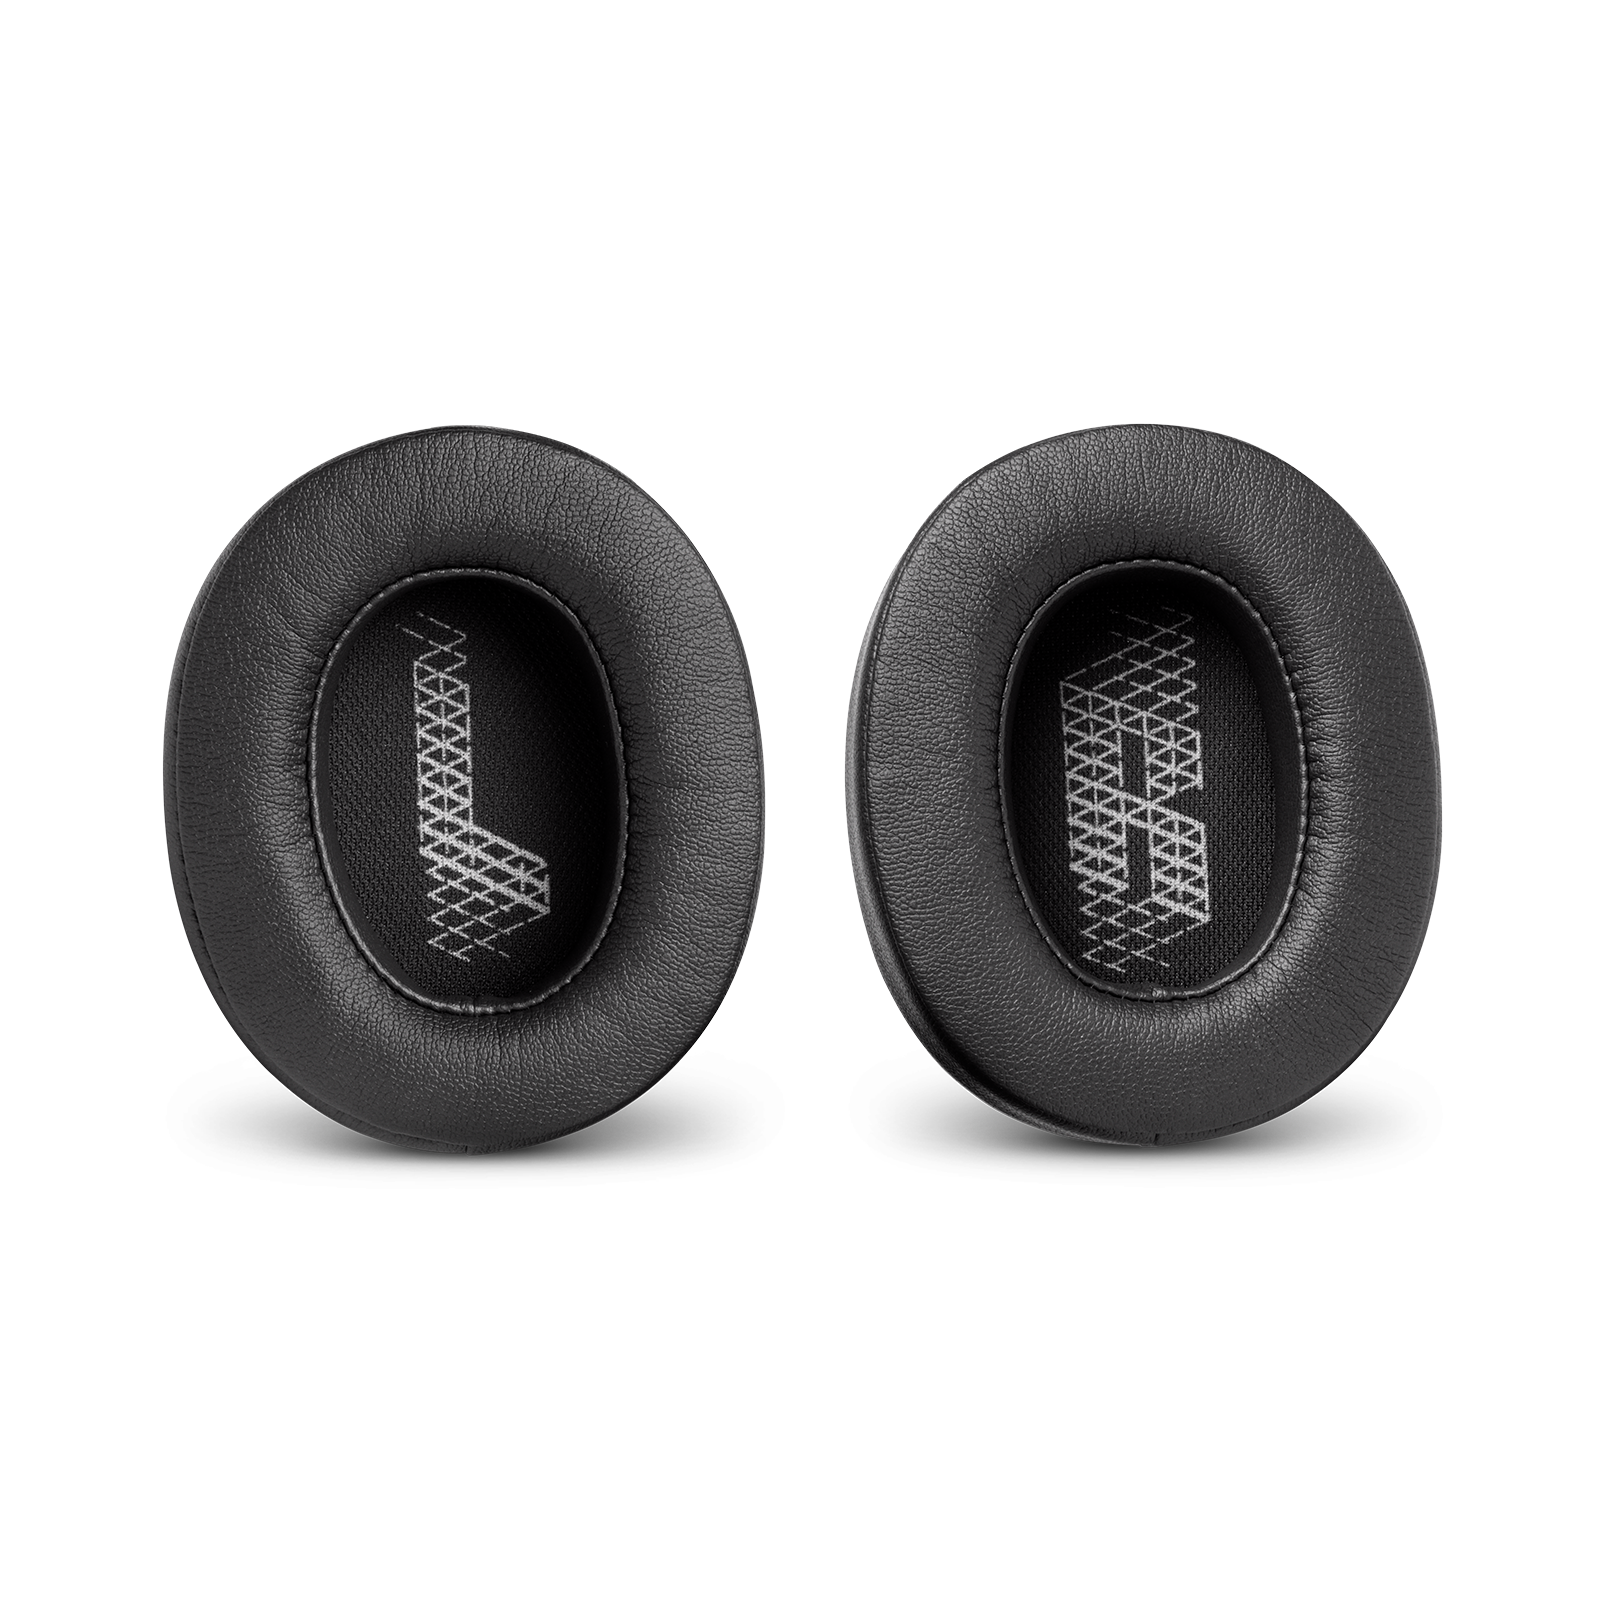 JBL Ear pads for Live 500 - Black - Ear pads (L+R) - Hero